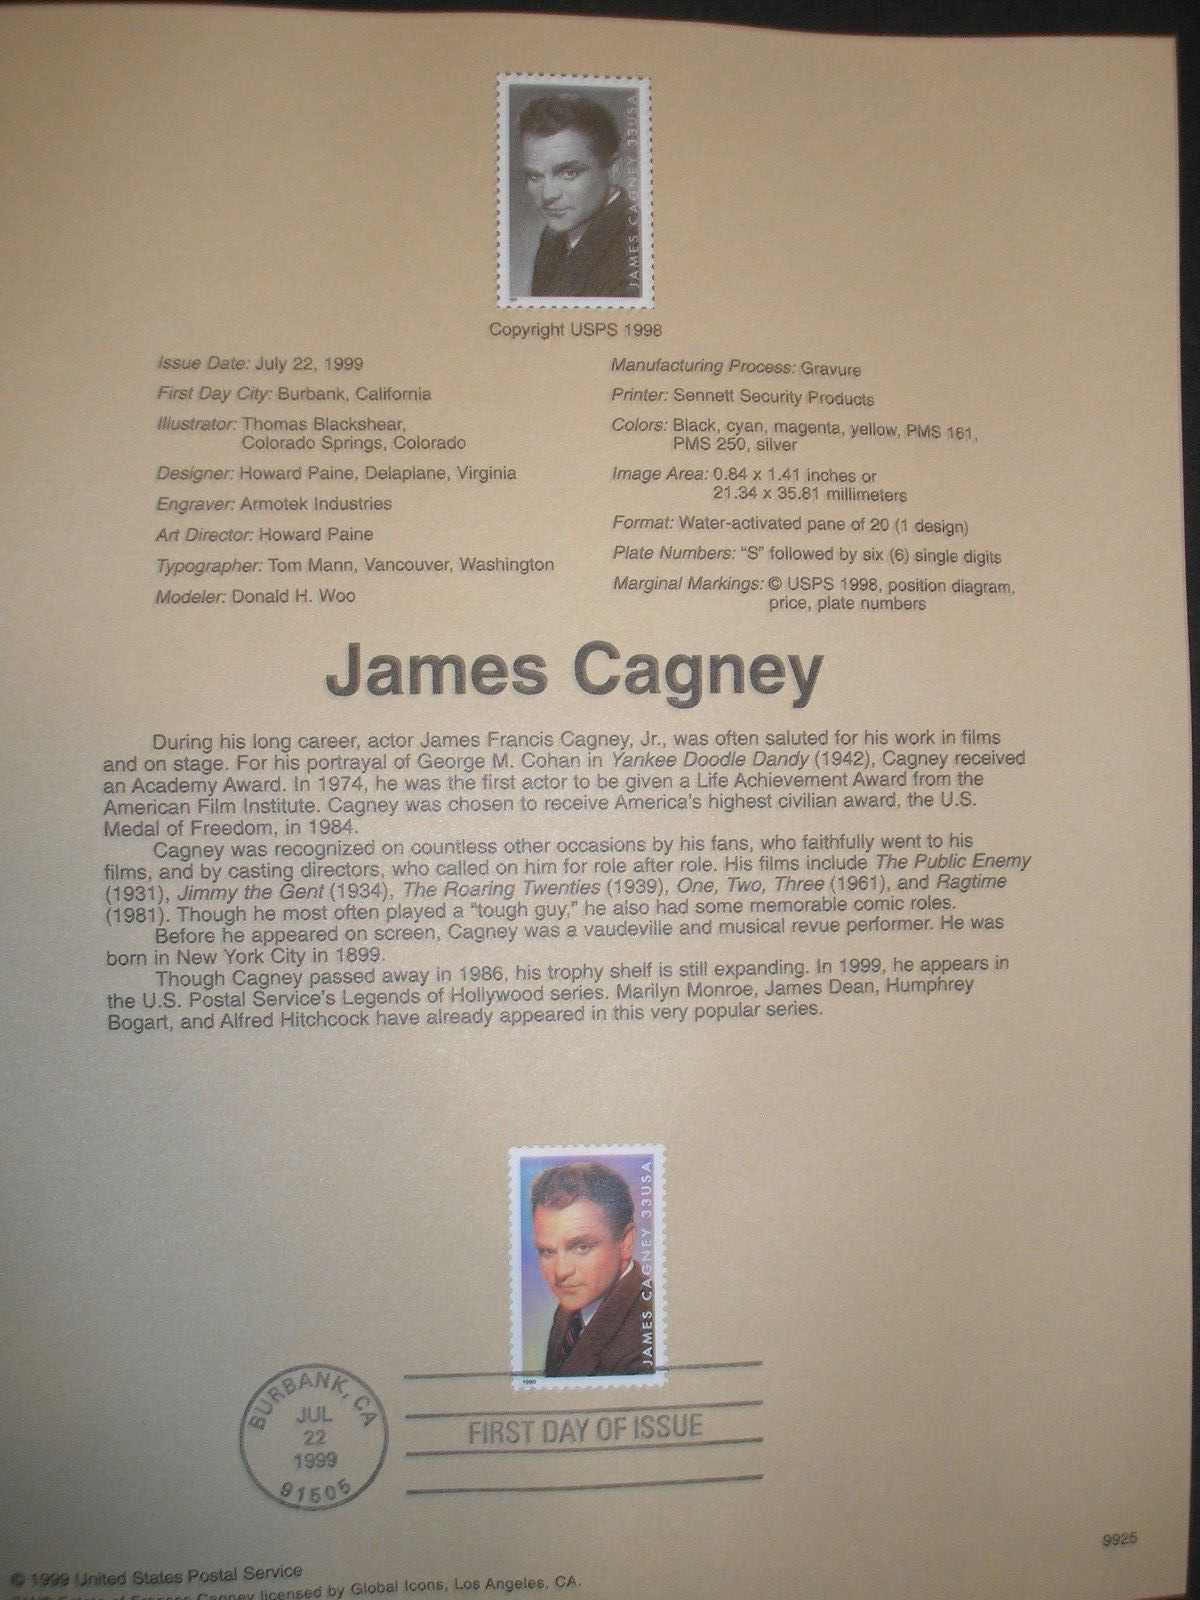 USPS Souvenir Page for .33 Scott 3329 James Cagney Stamp.